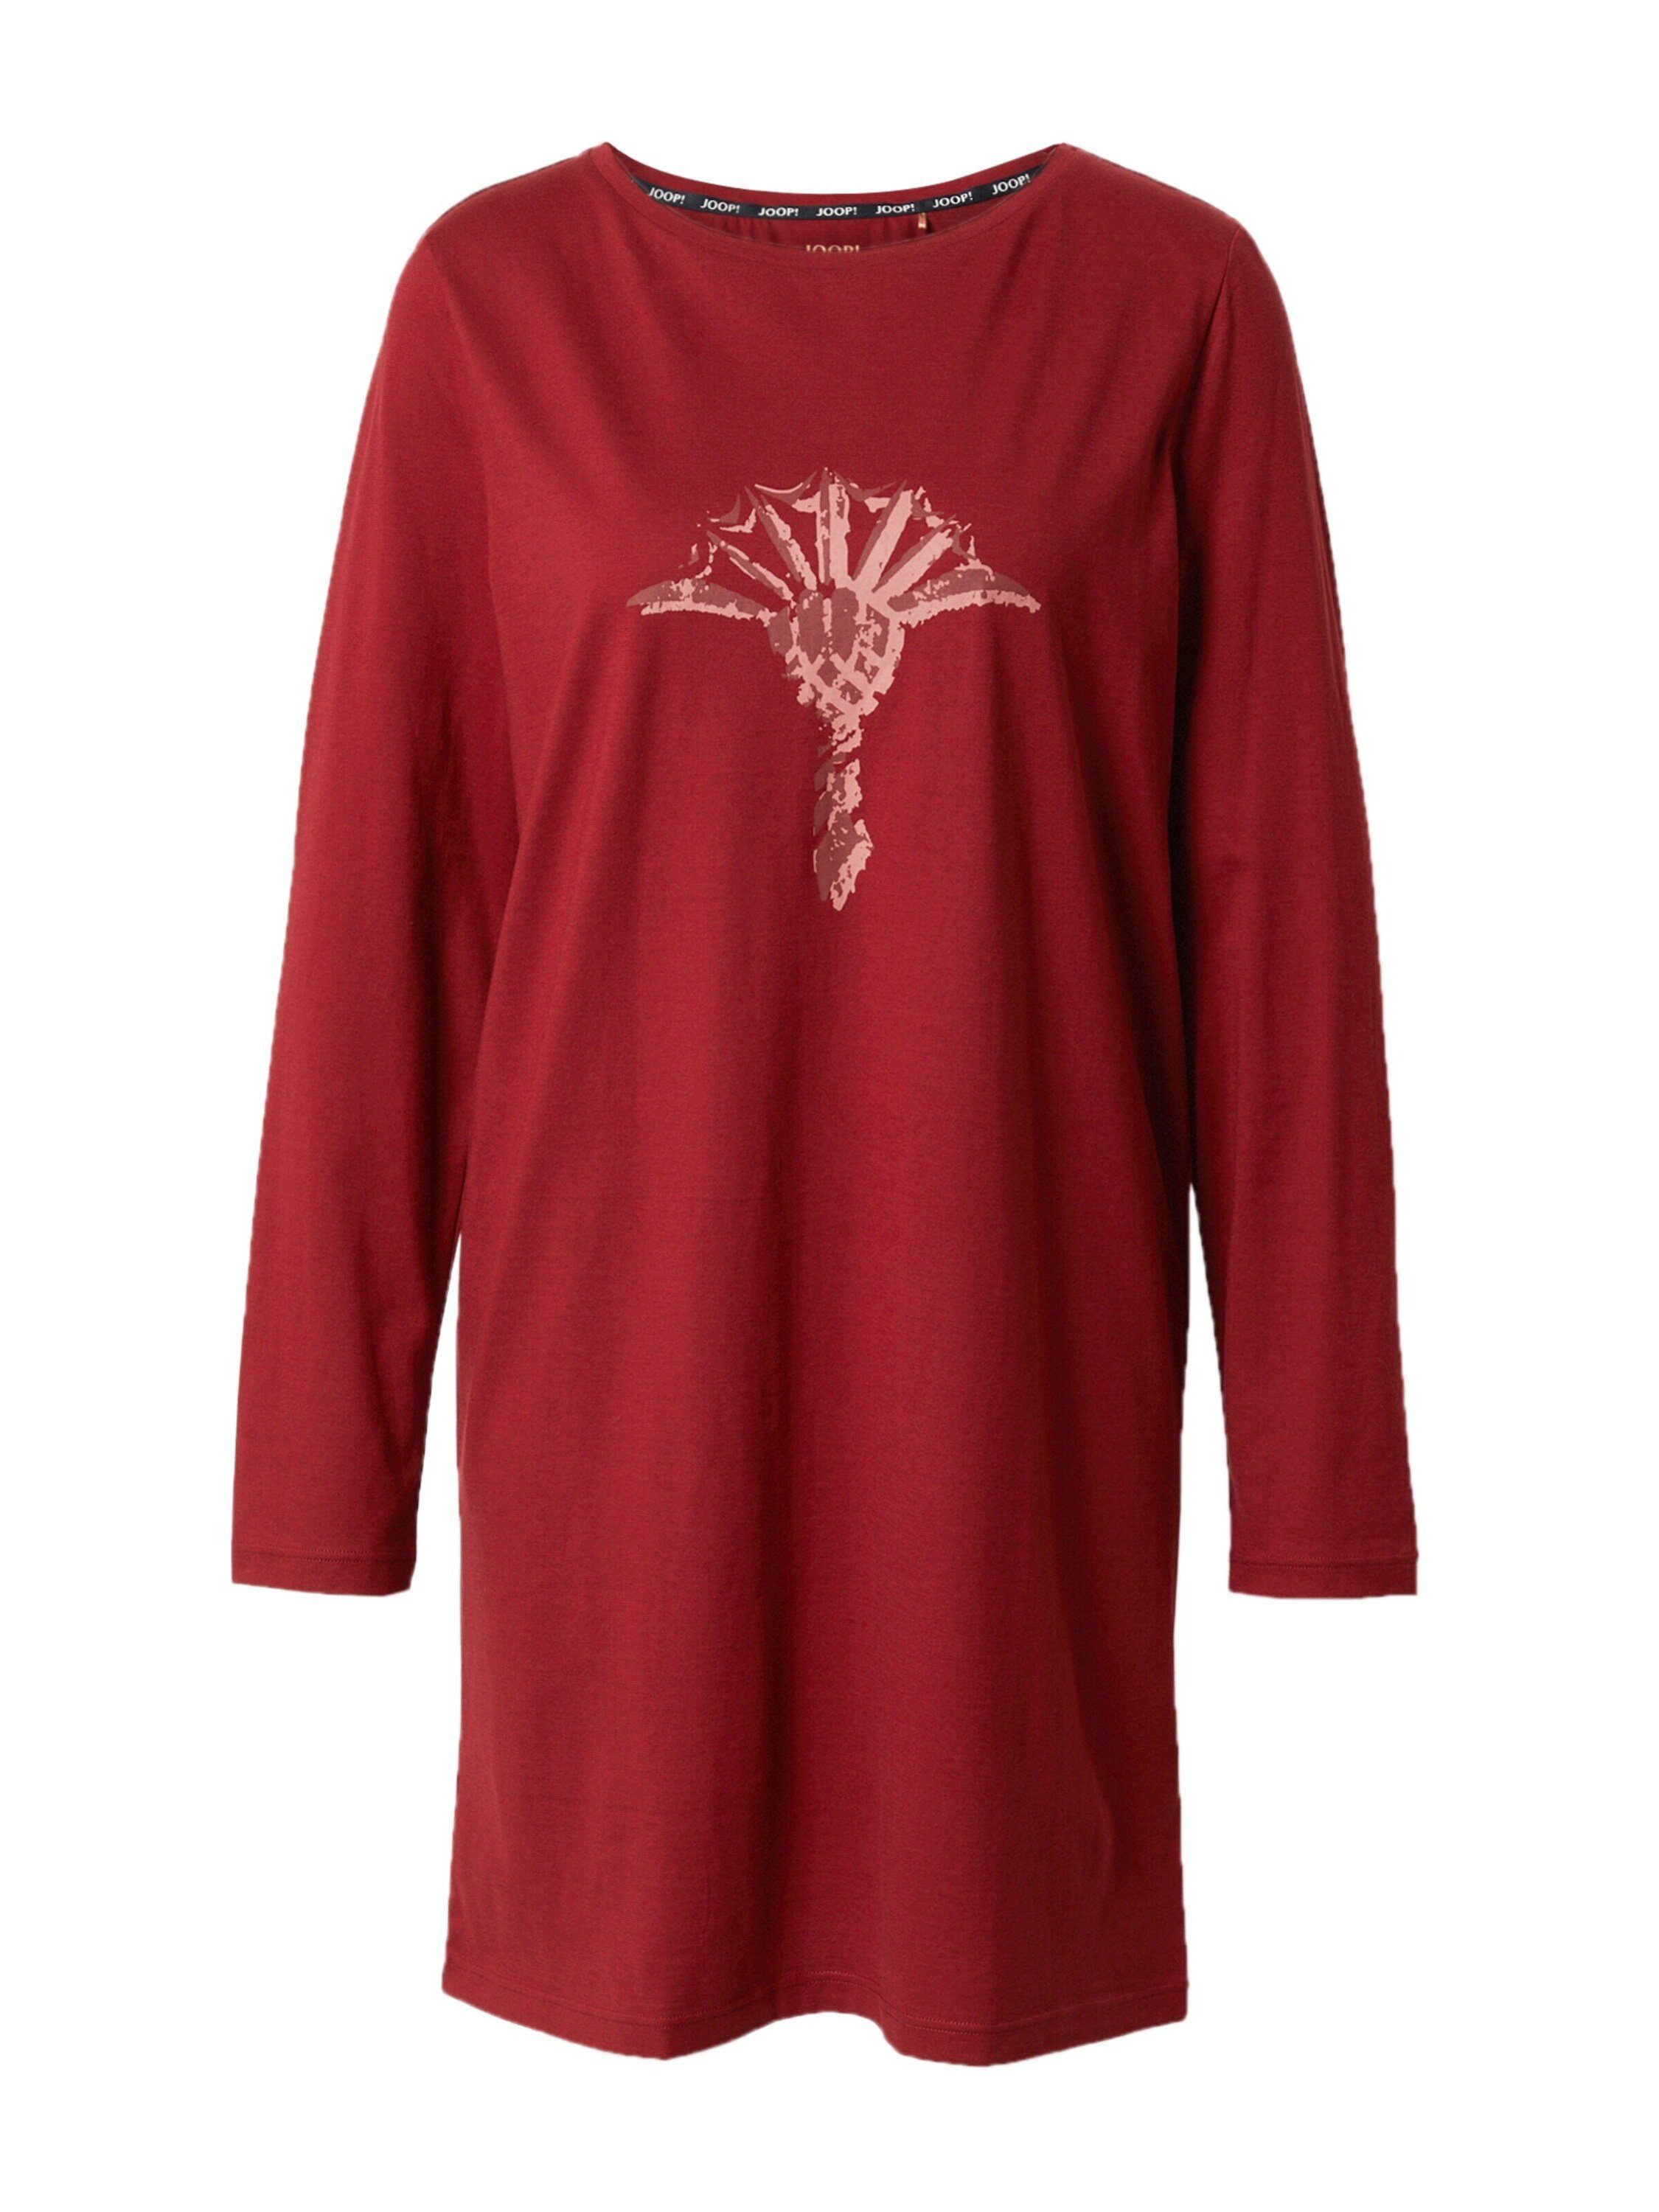 Material: Details Kimono, 100% Joop! Rot Plain/ohne Baumwolle,